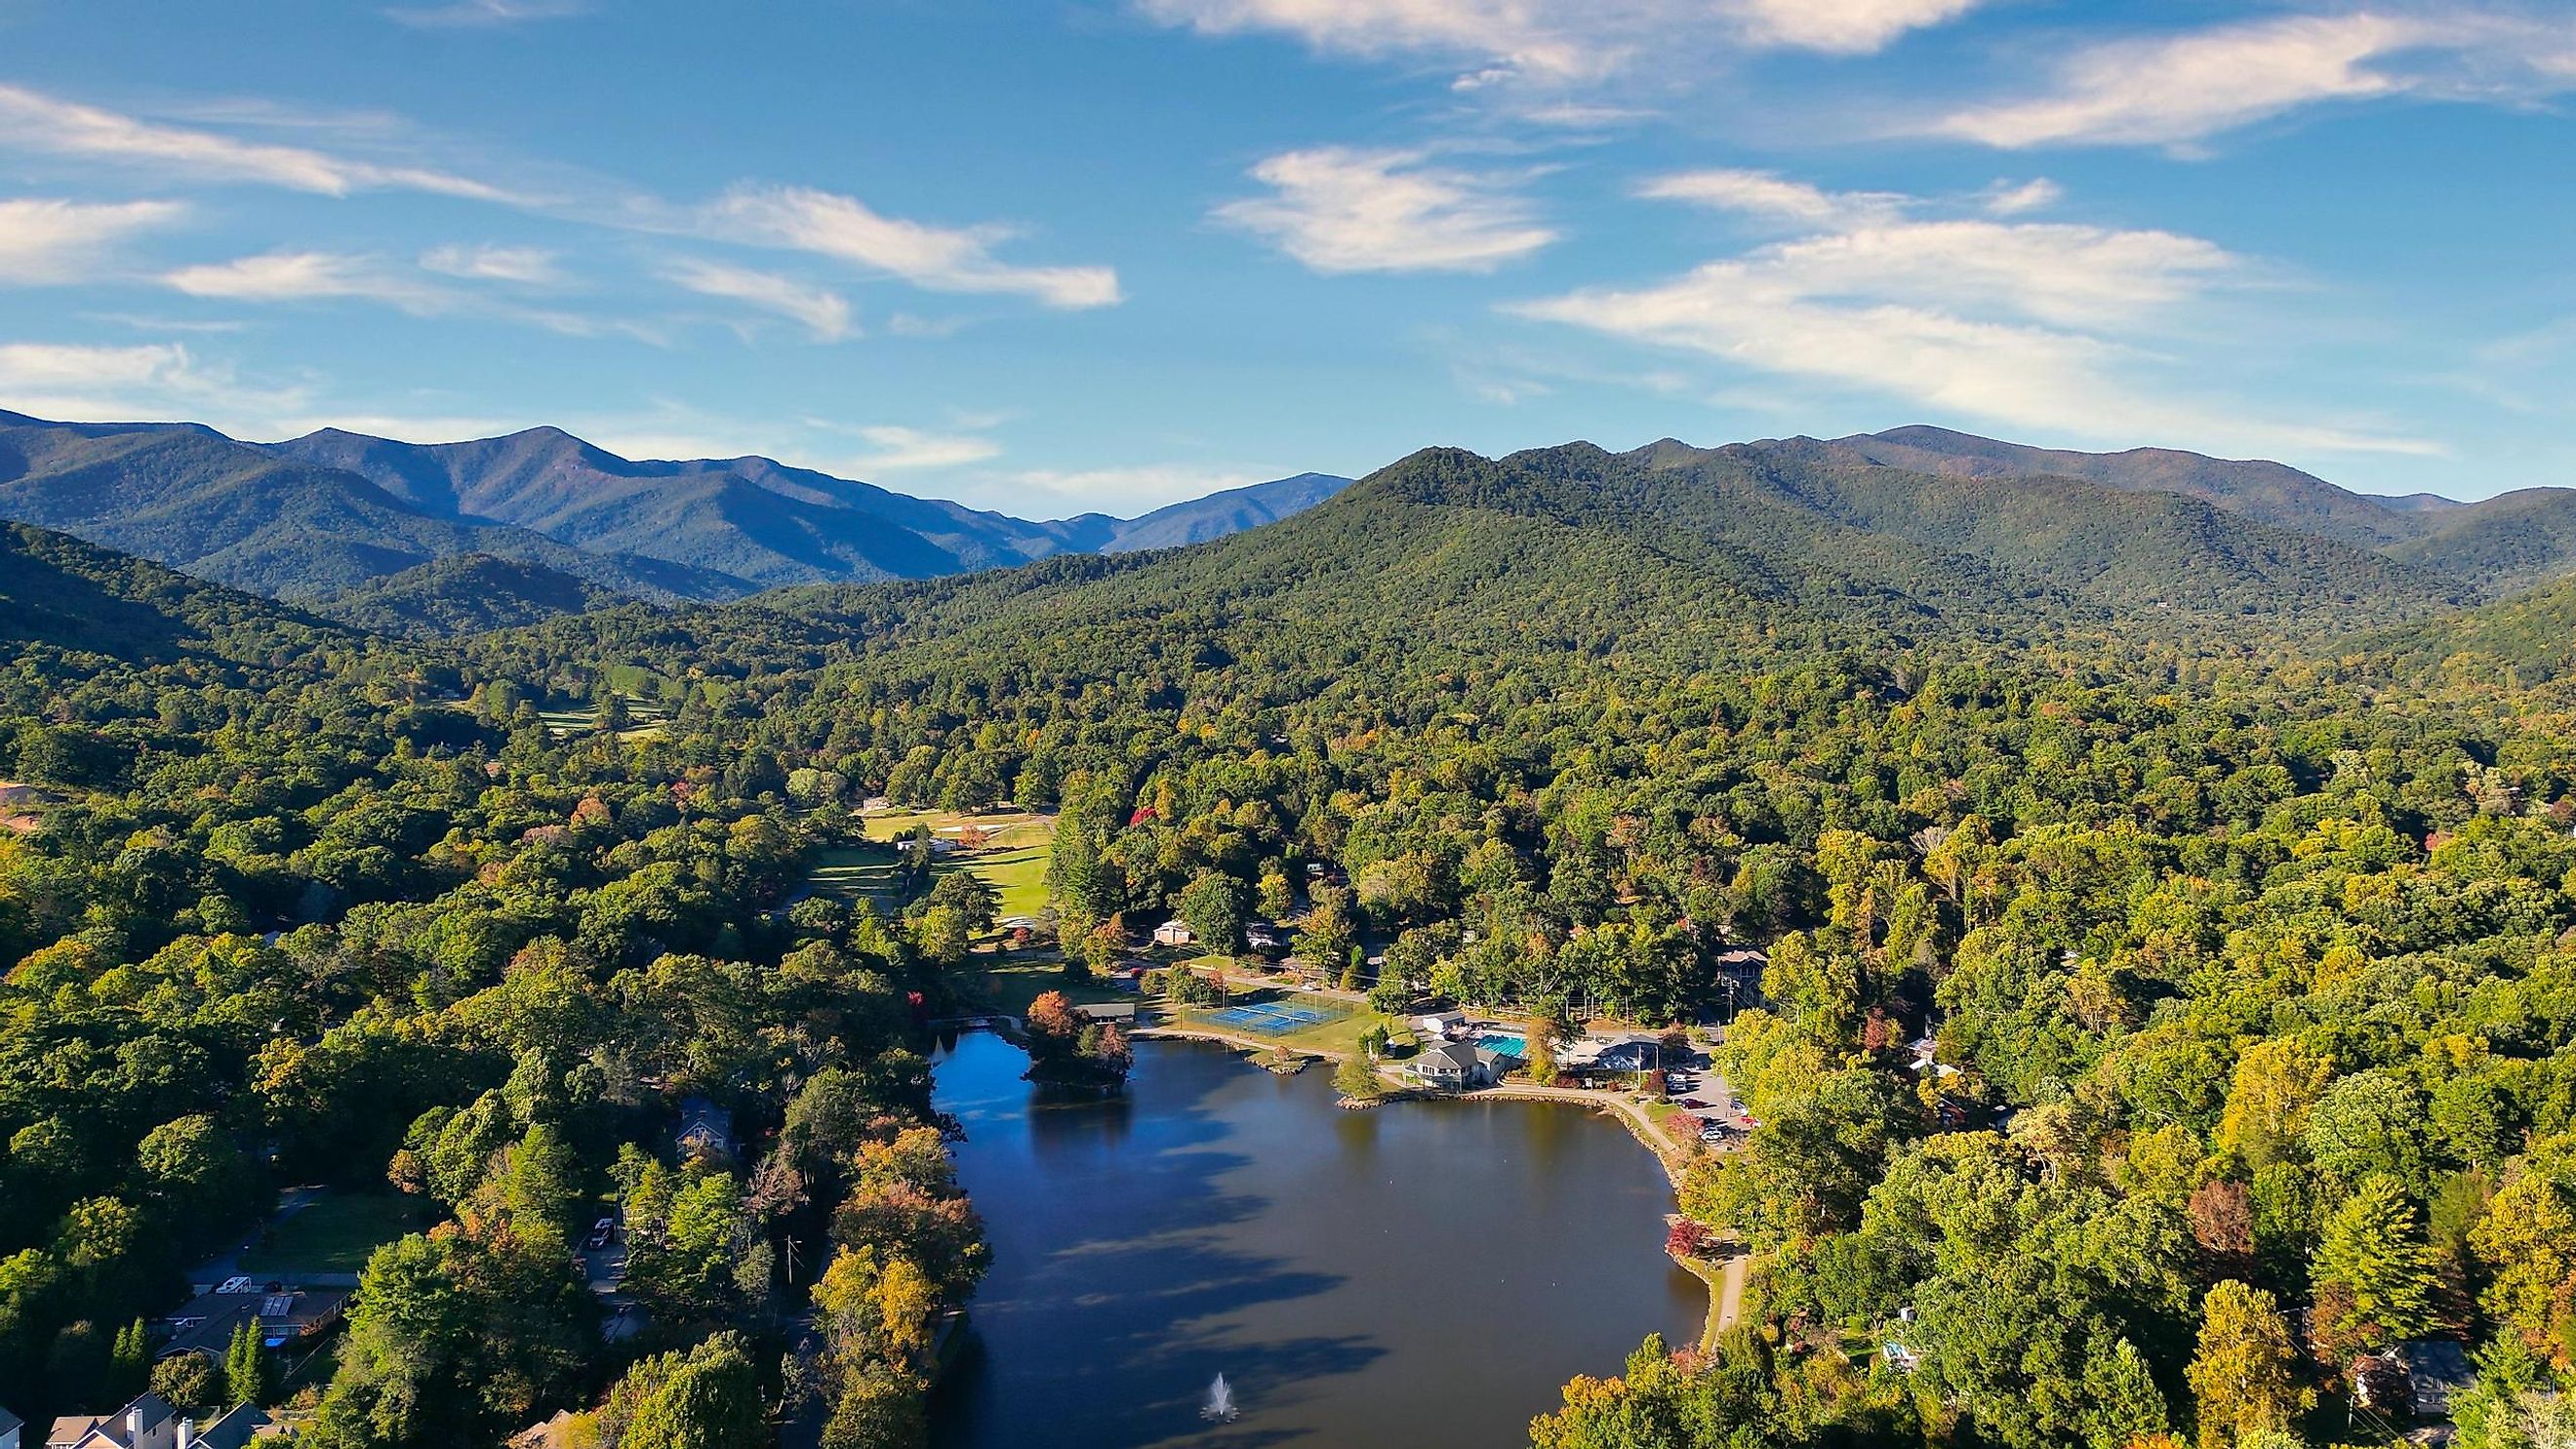 The pretty mountain town of Black Mountain in North Carolina.